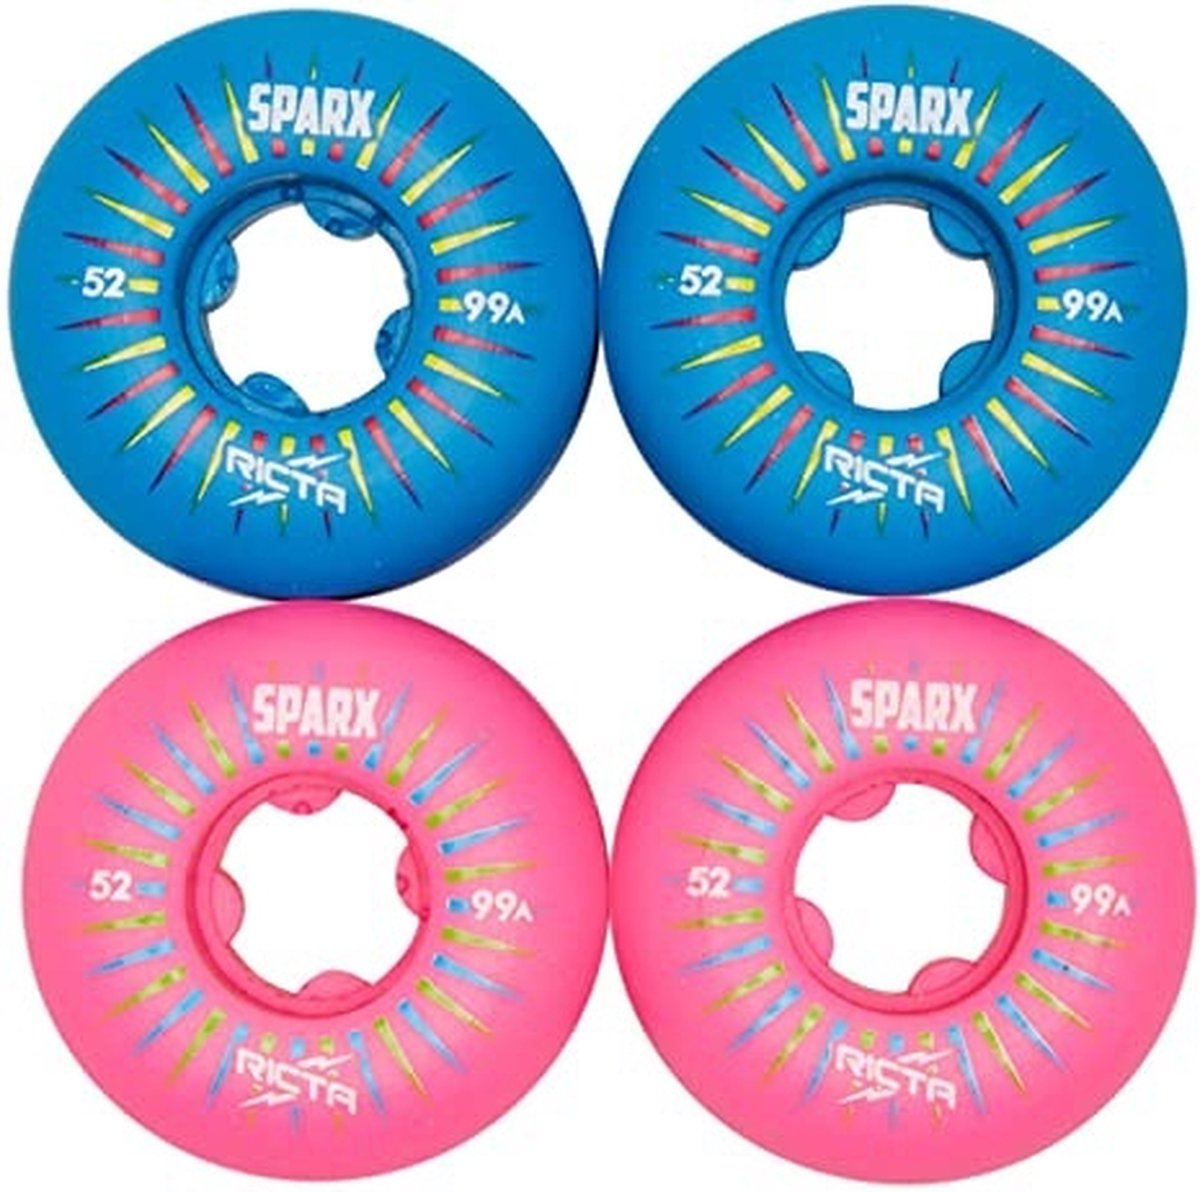 Ricta wheels Sparx 52mm multi color